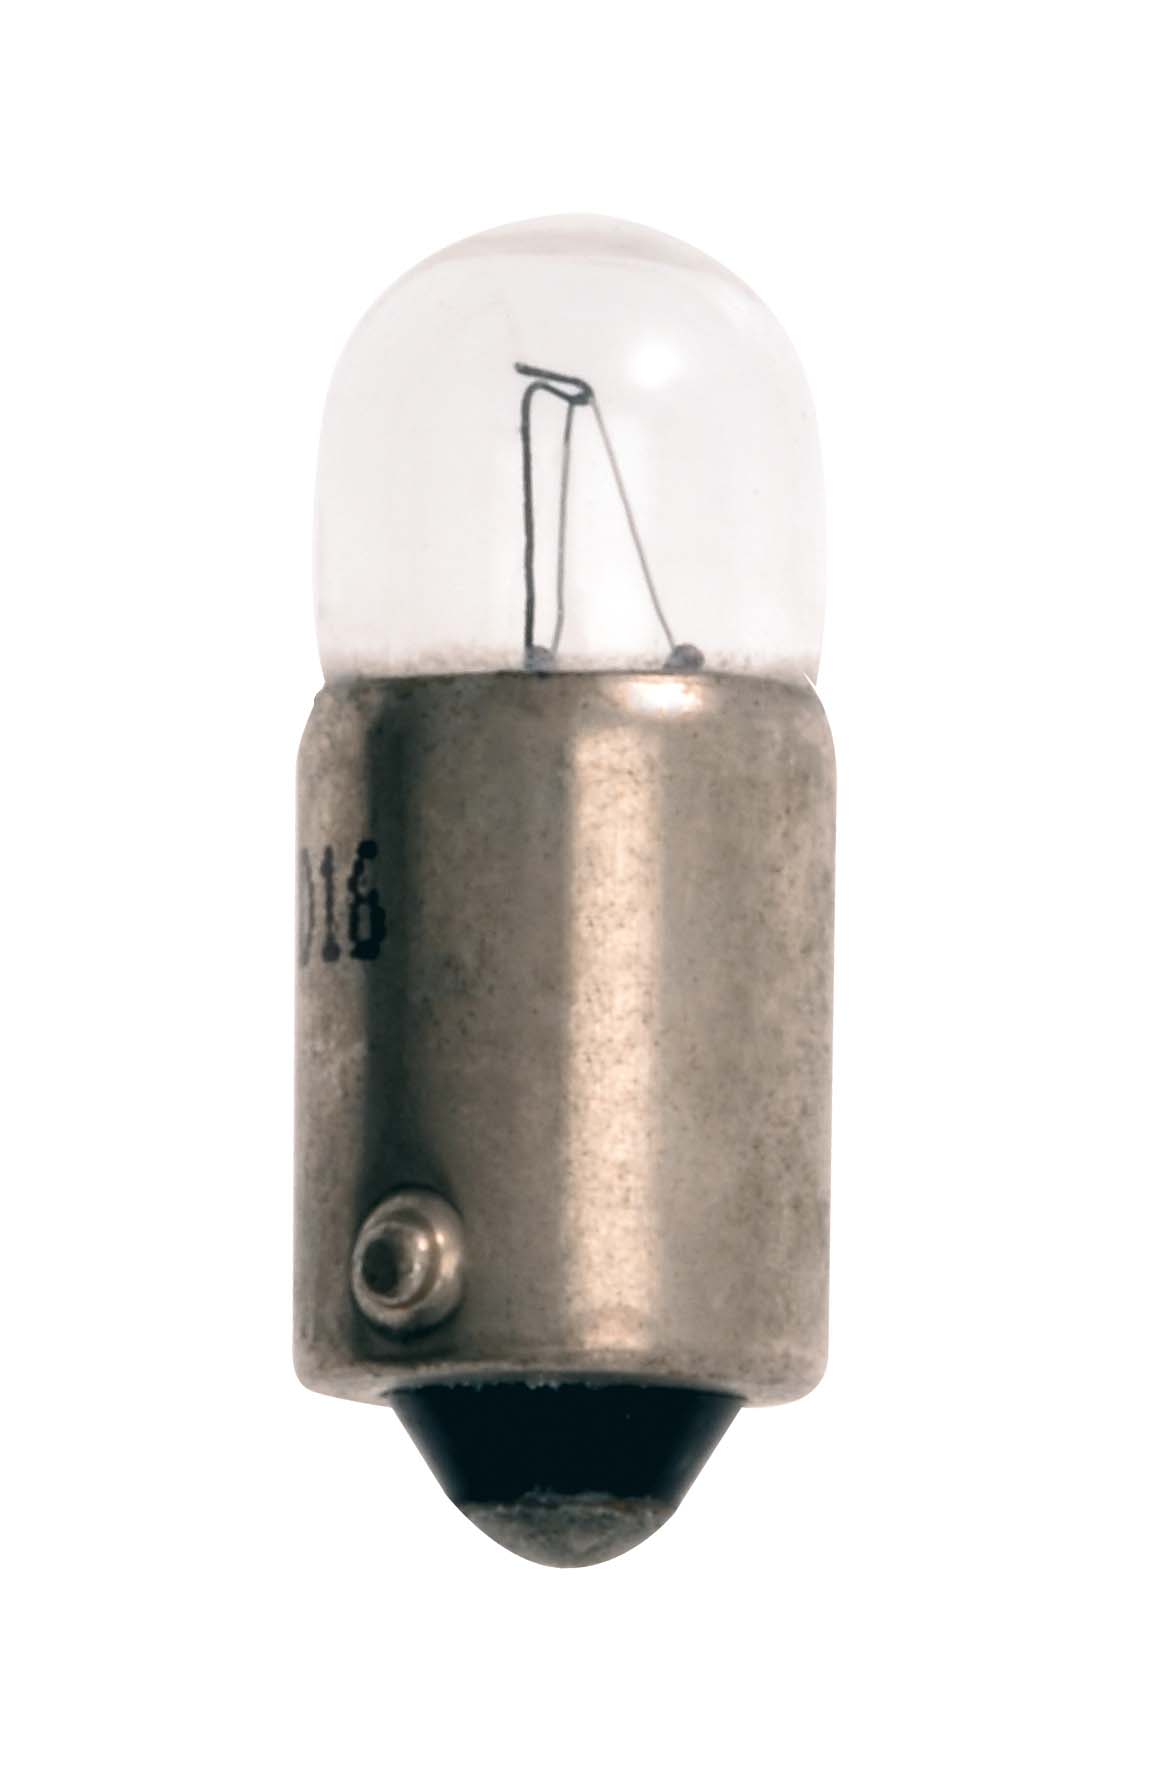 24v, 2w Standard Bulb With A Ba9s Mcc Base Main Image